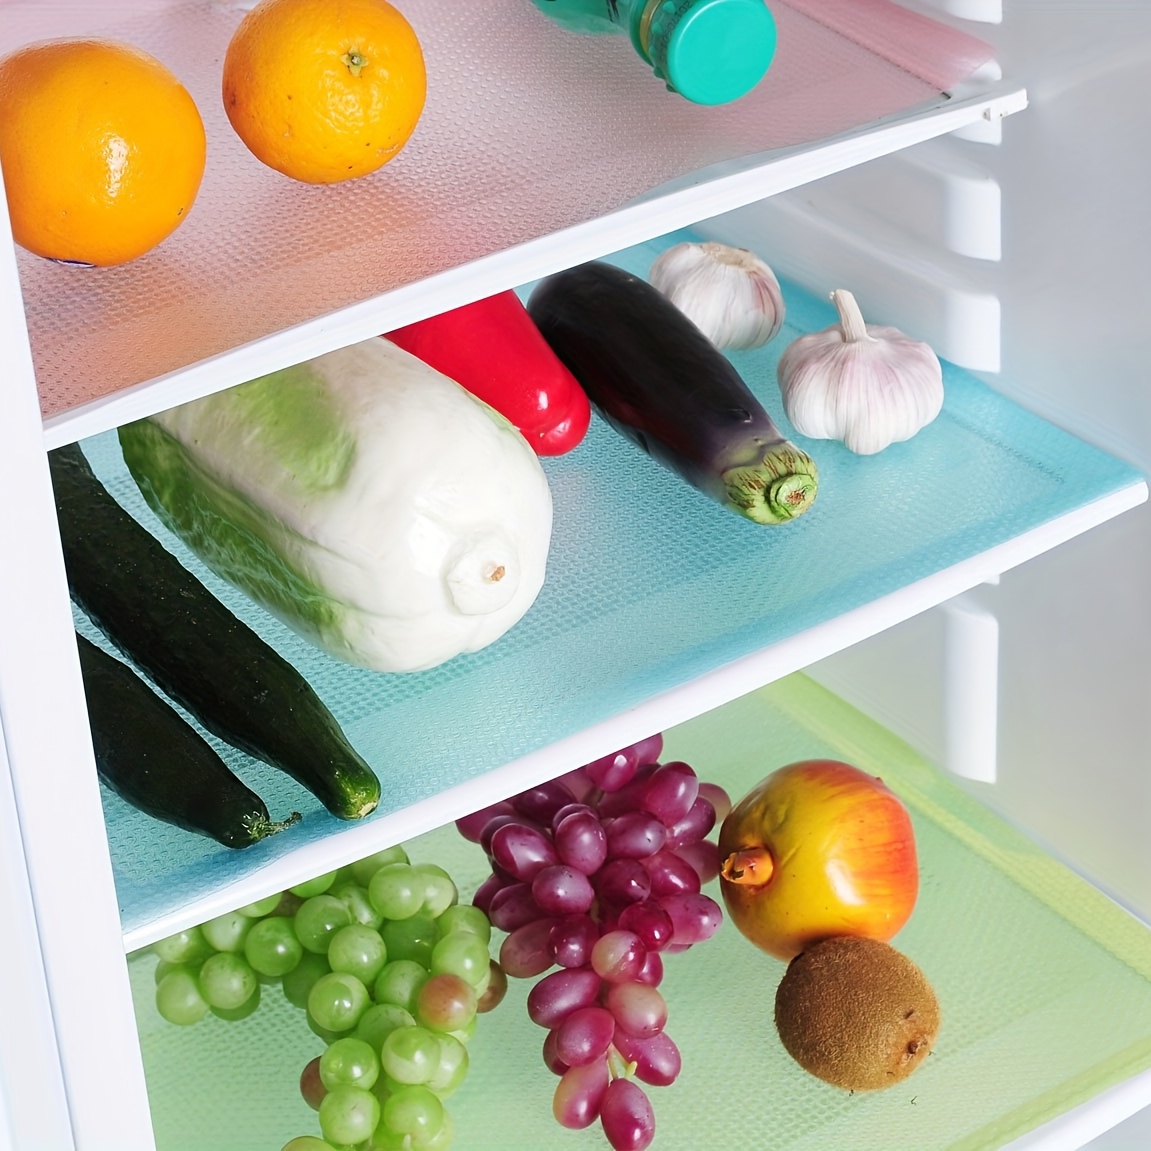 Washable Refrigerator Shelf Liners, Use Shelf Liner